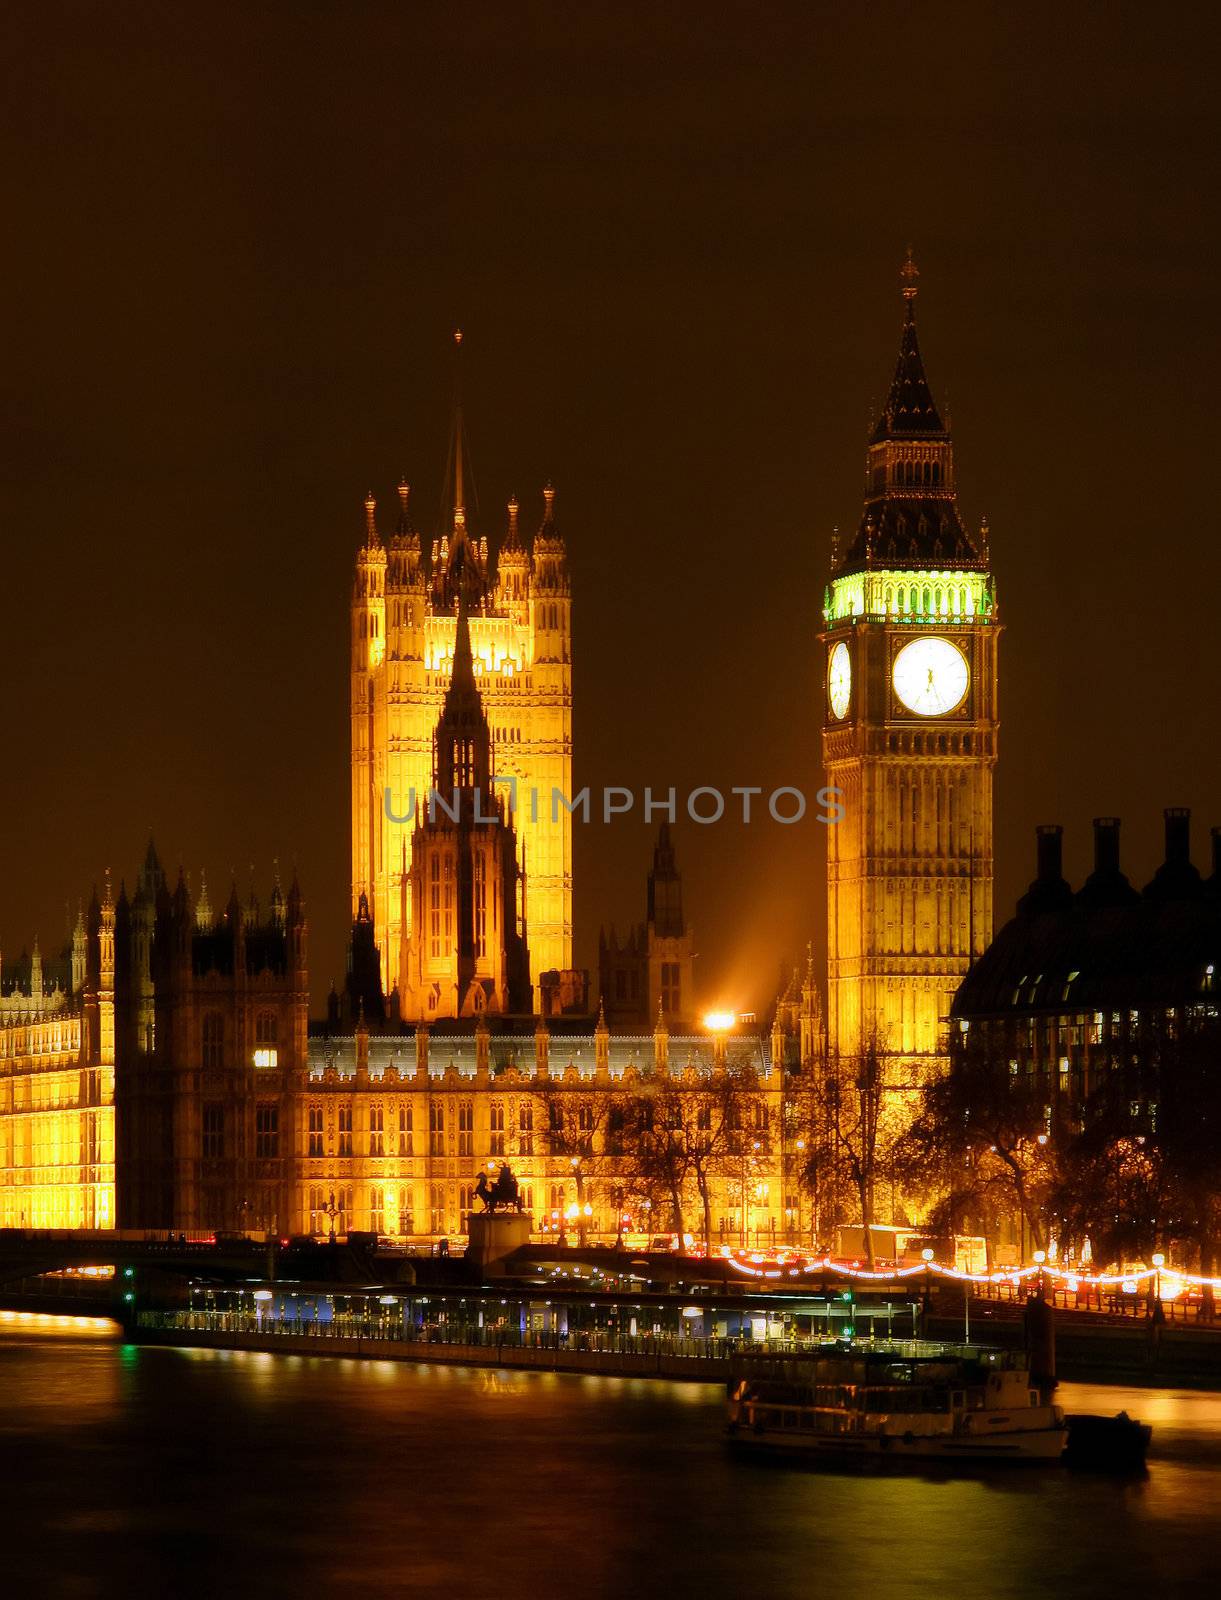 House of Parliament  London  U.K.
Low Light Photography